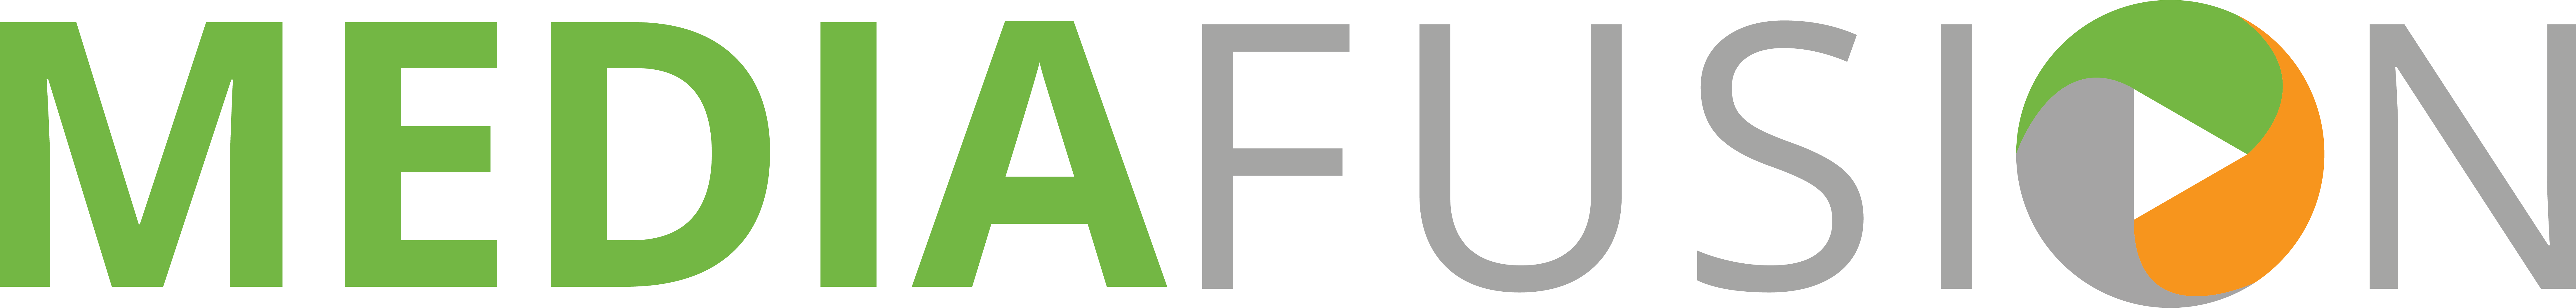 MediaFusion logo